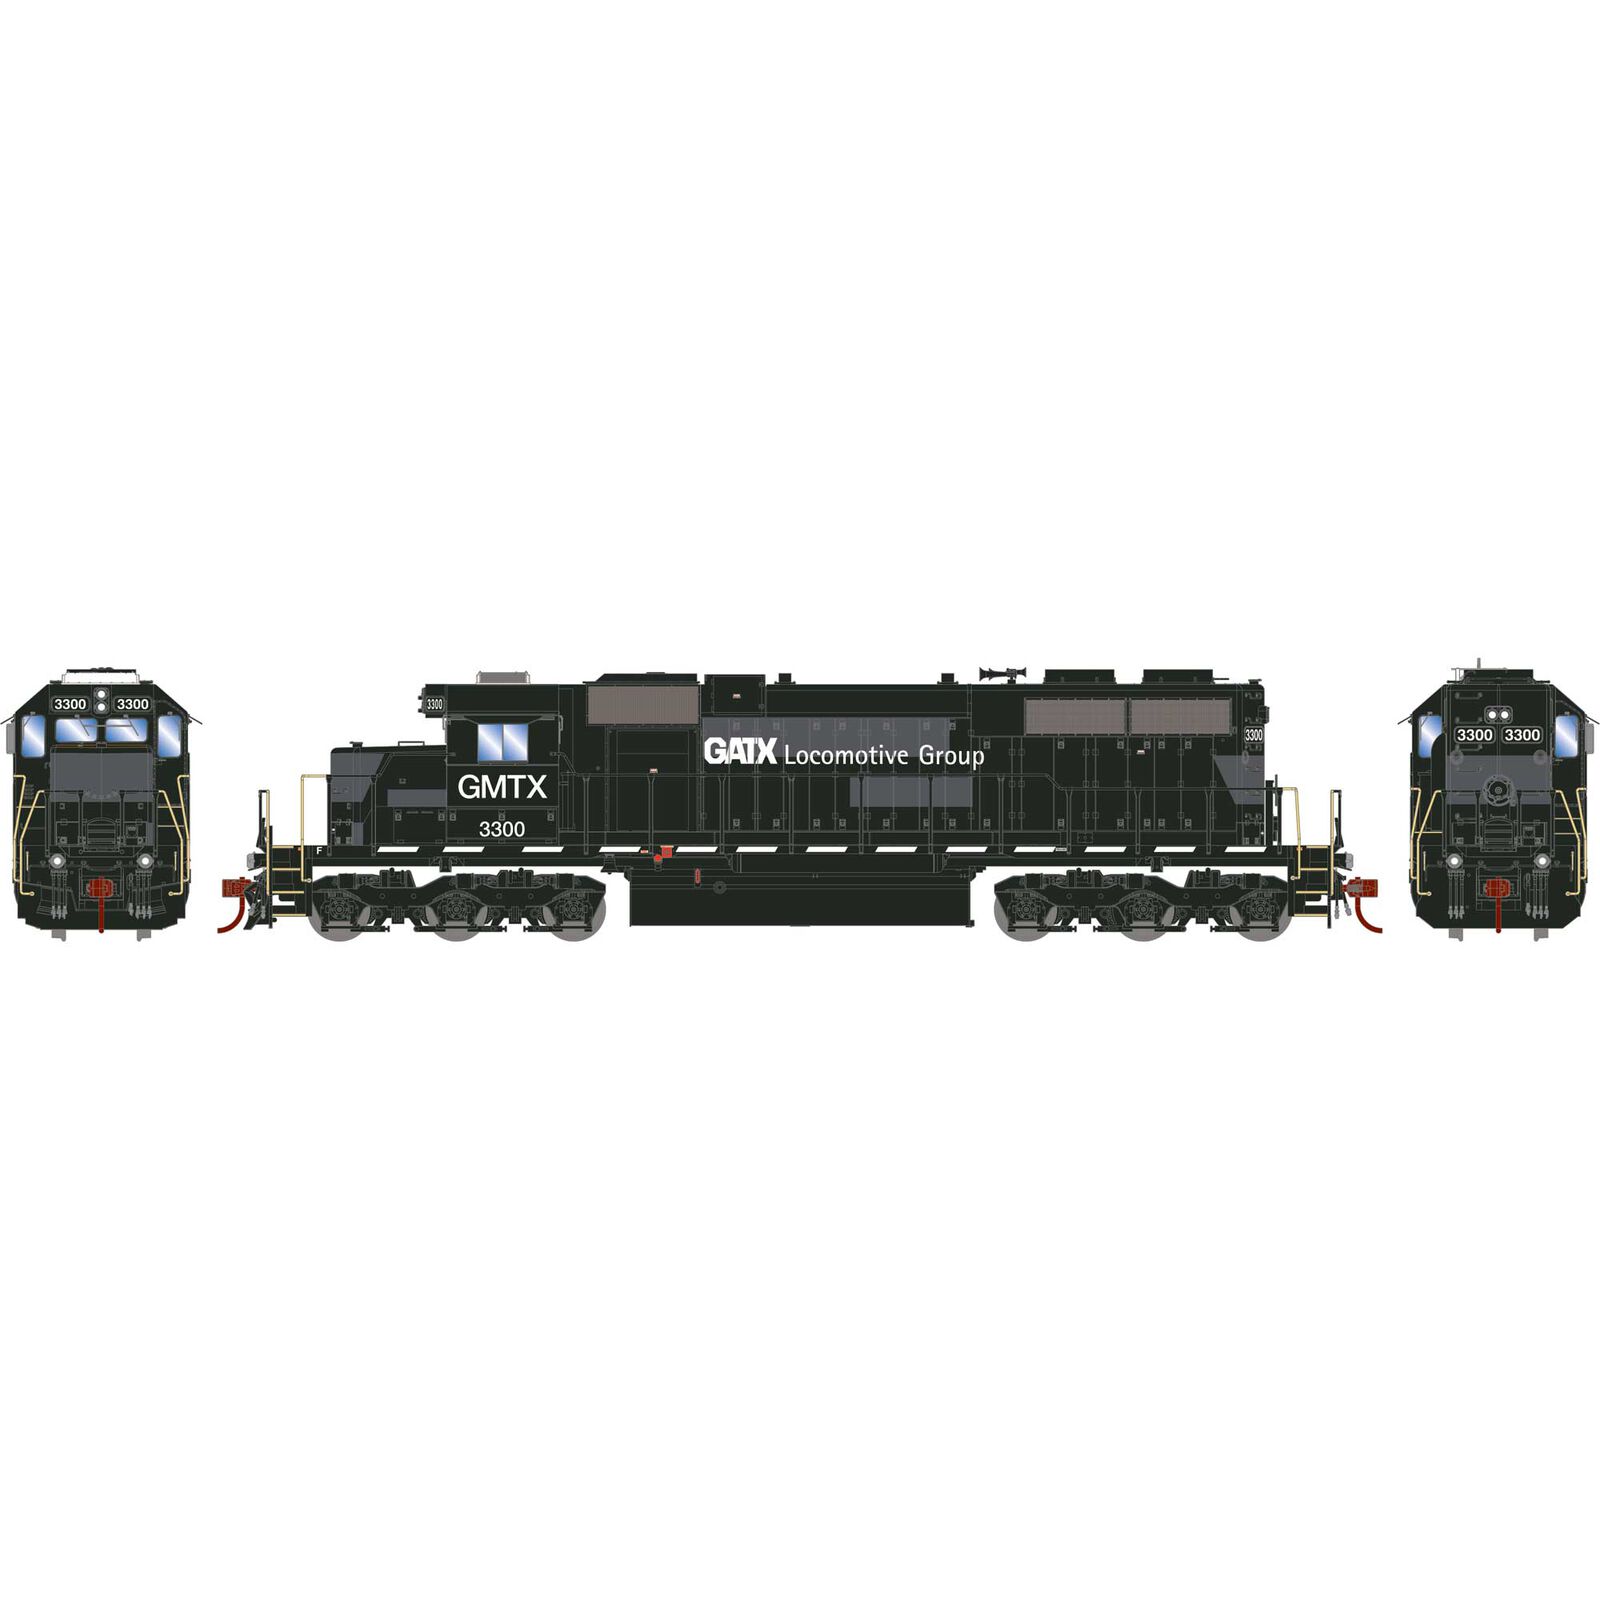 HO EMD SD38 Locomotive with DCC & Sound, GMTX Primed For Grime #3300